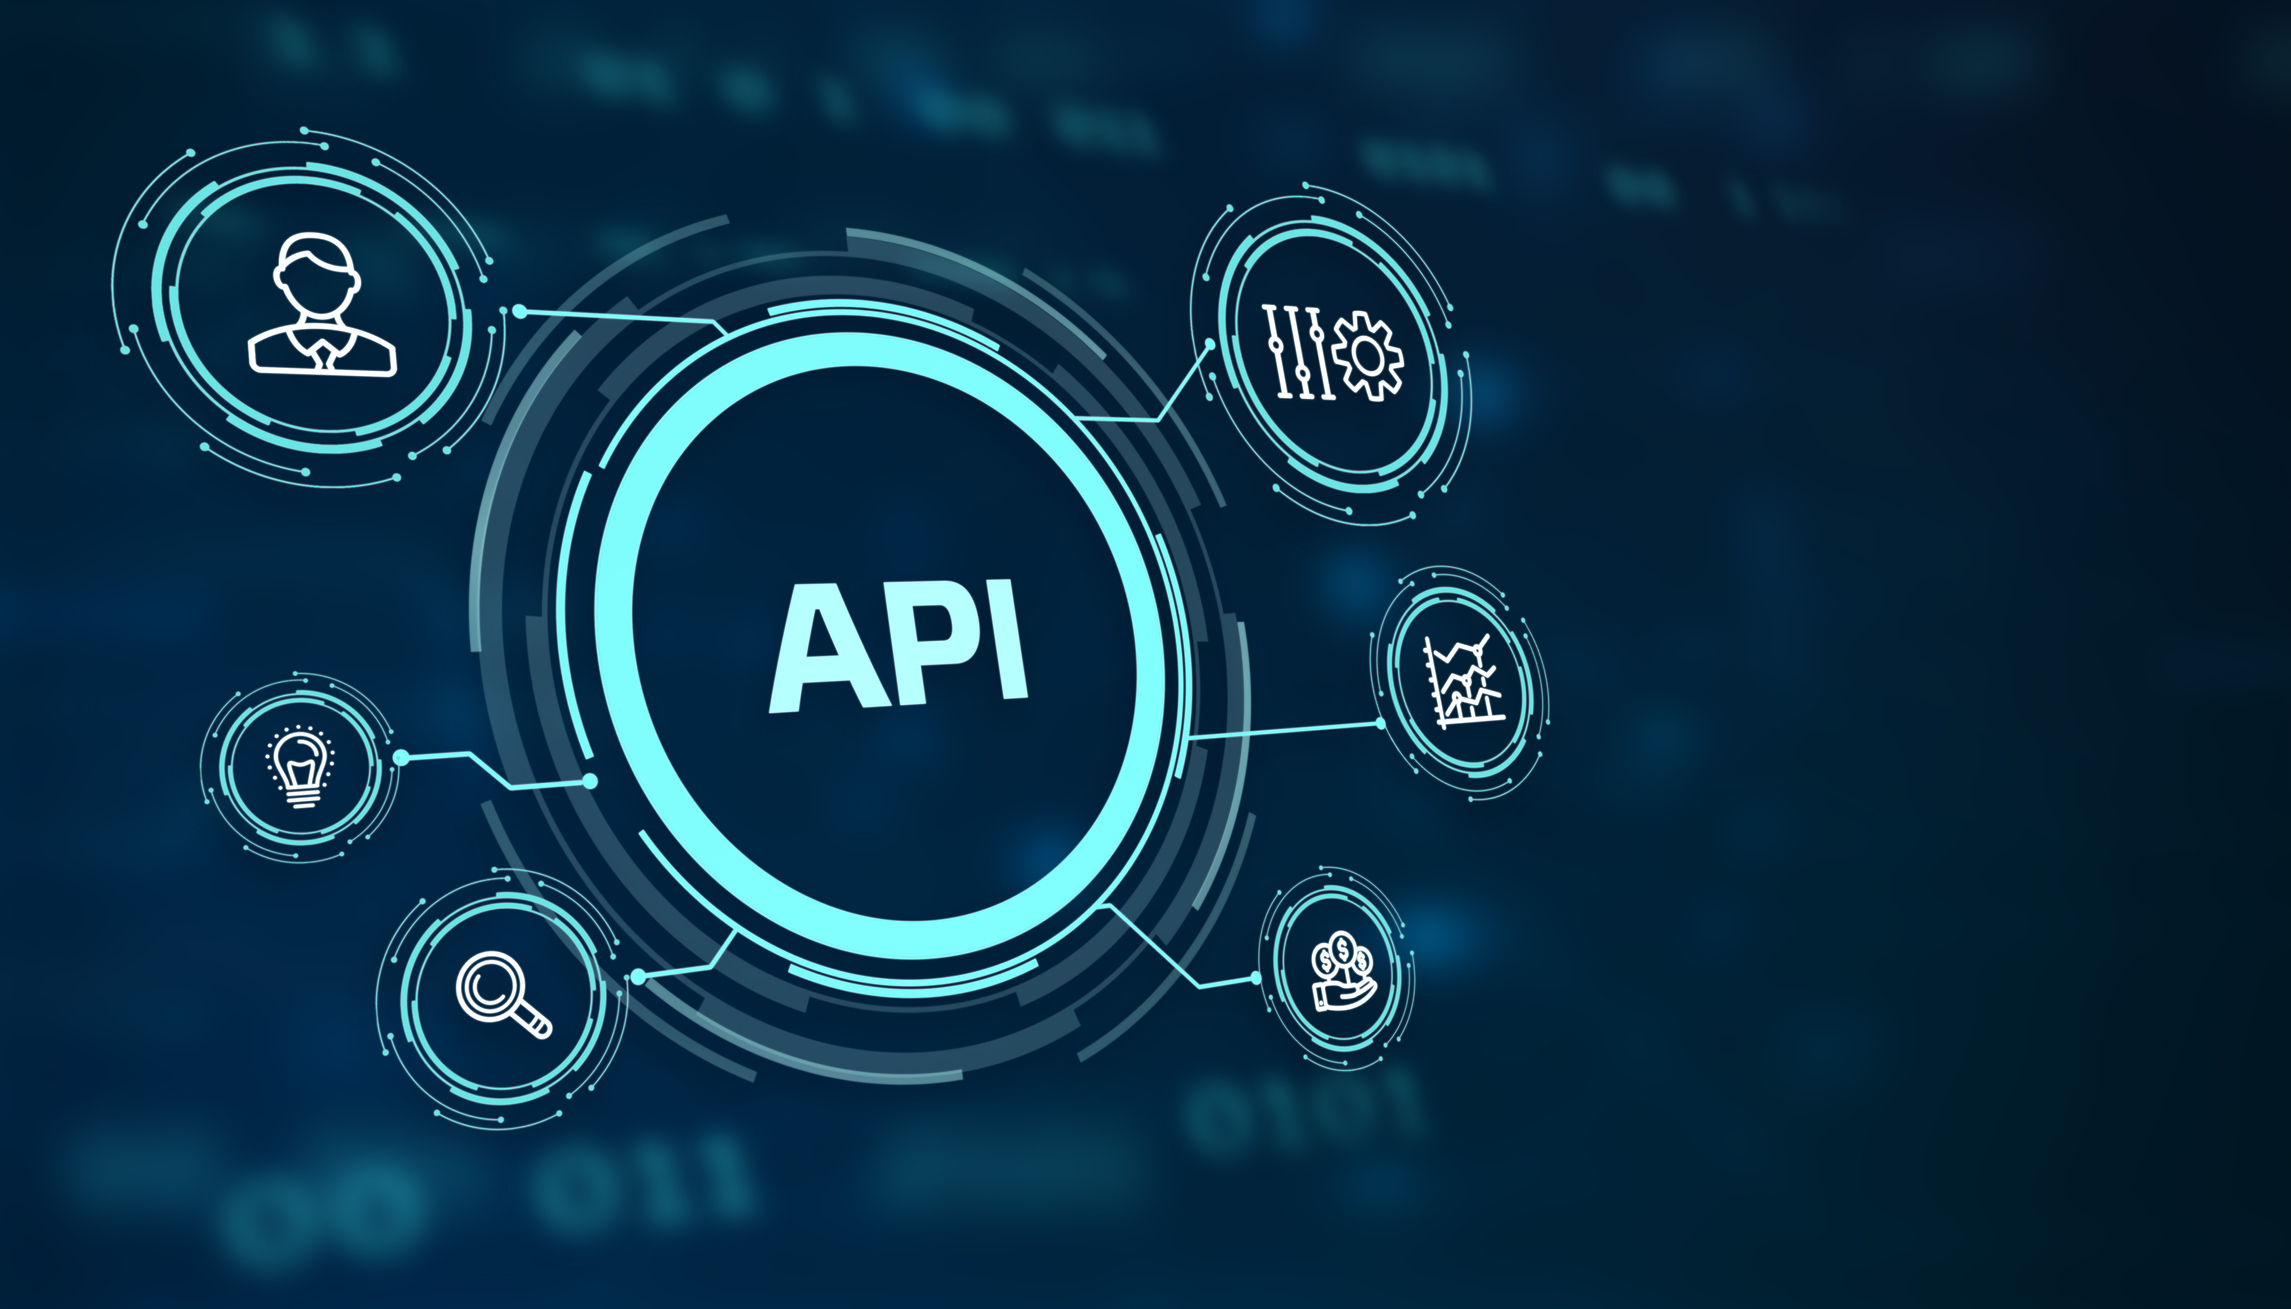 API security: Escape raises 3.6 million euros